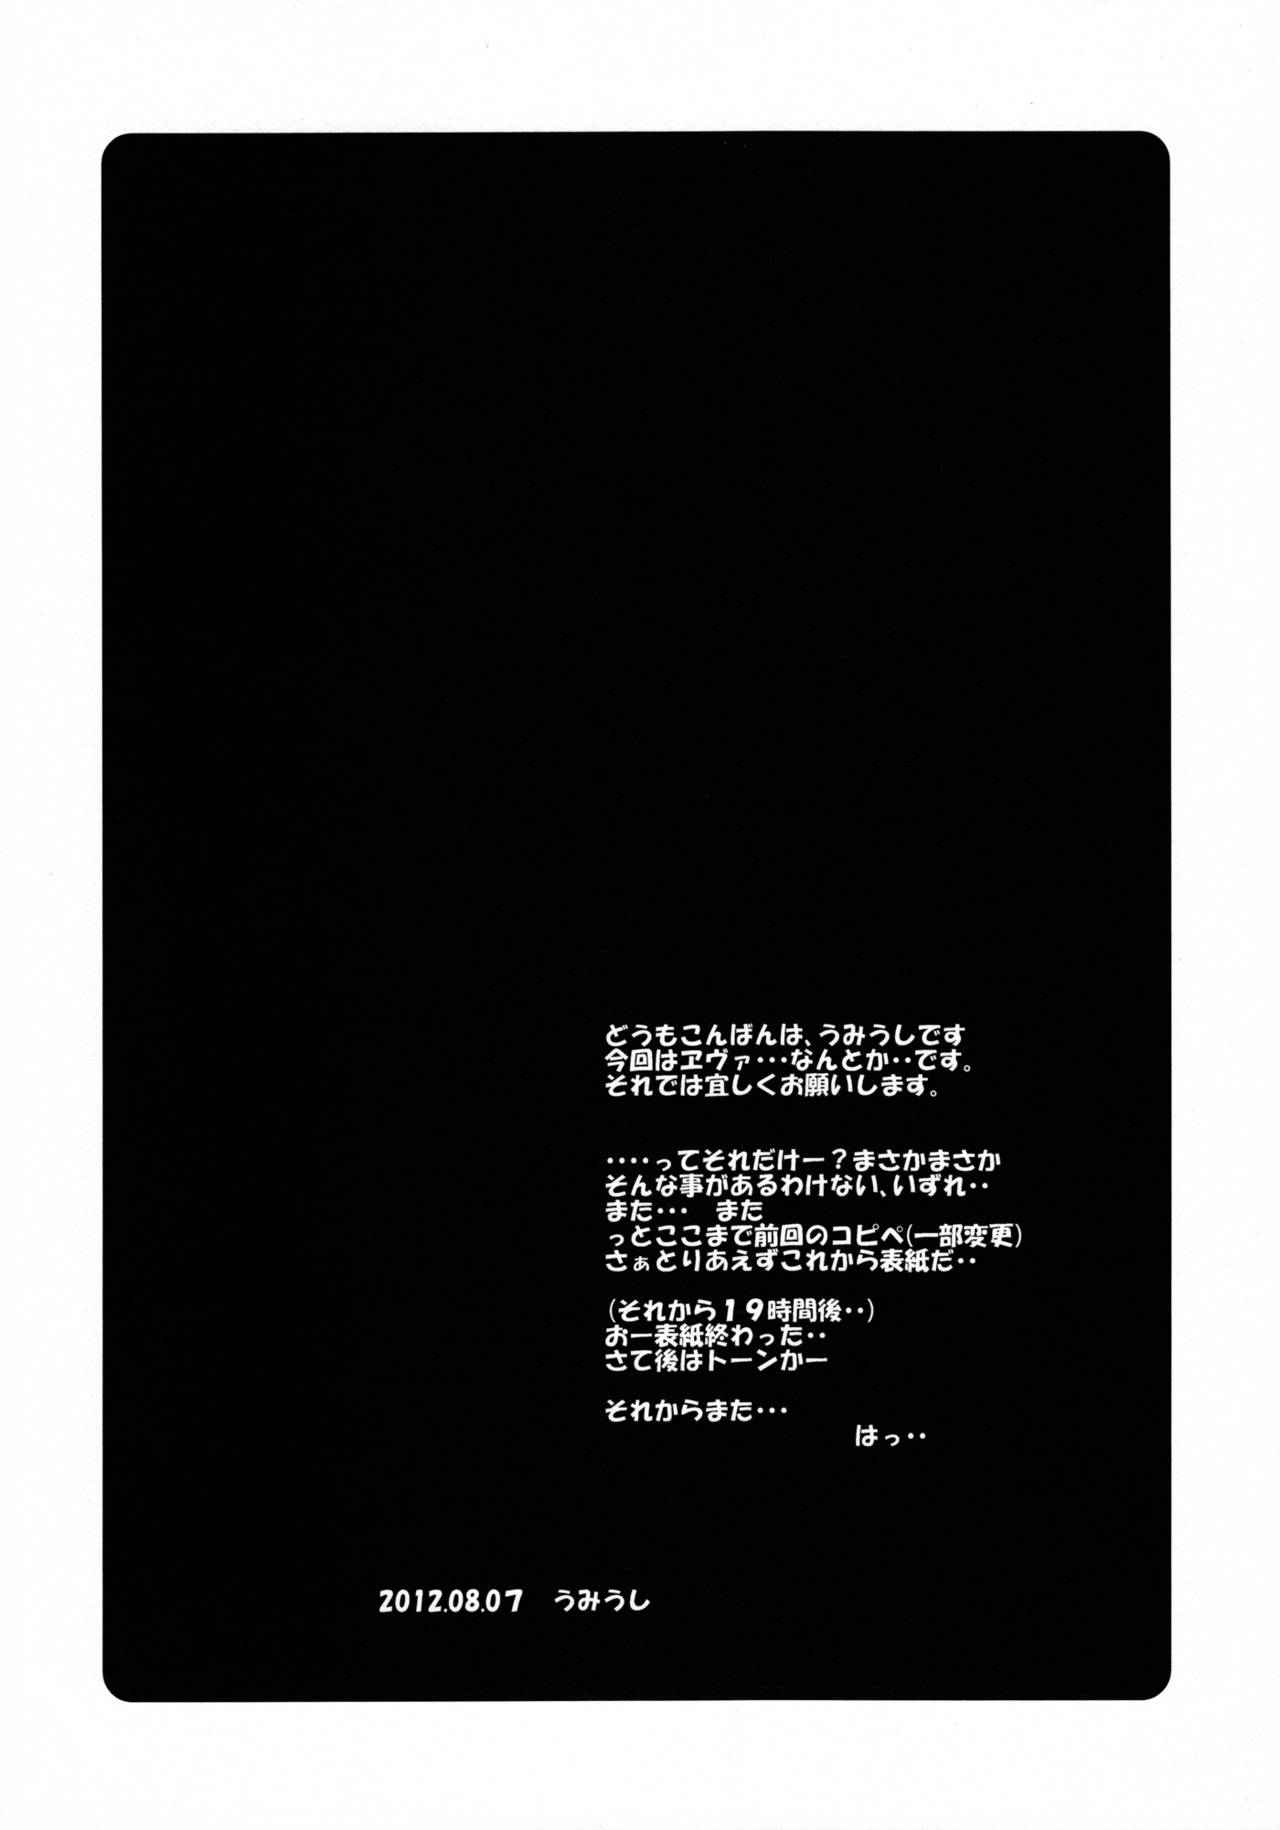 (C82) [Poyopacho (UmiUshi)] Poyopacho AM (Neon Genesis Evangelion) (C82) [ぽよぱちょ (うみうし)] Poyopacho AM (新世紀エヴァンゲリオン)